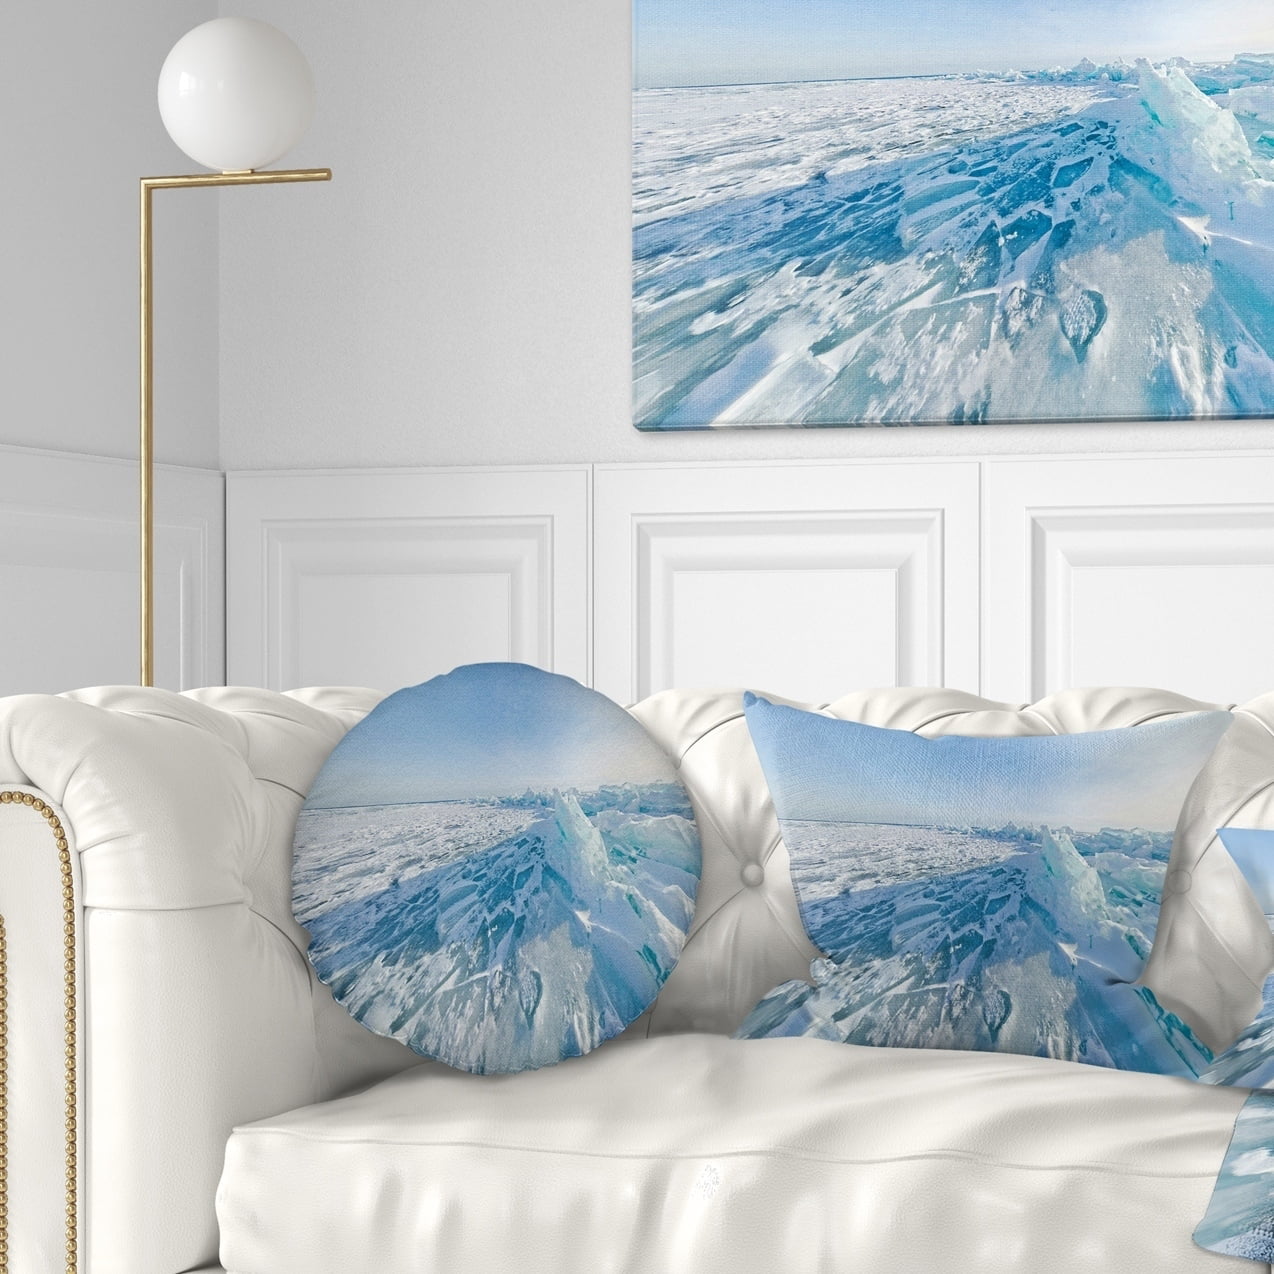 Sofa Designart CU11736-16-16 Ice Hummocks in Lake Baikal Siberia Landscape Printed Cushion Cover for Living Room 16 x 16, Throw Pillow 